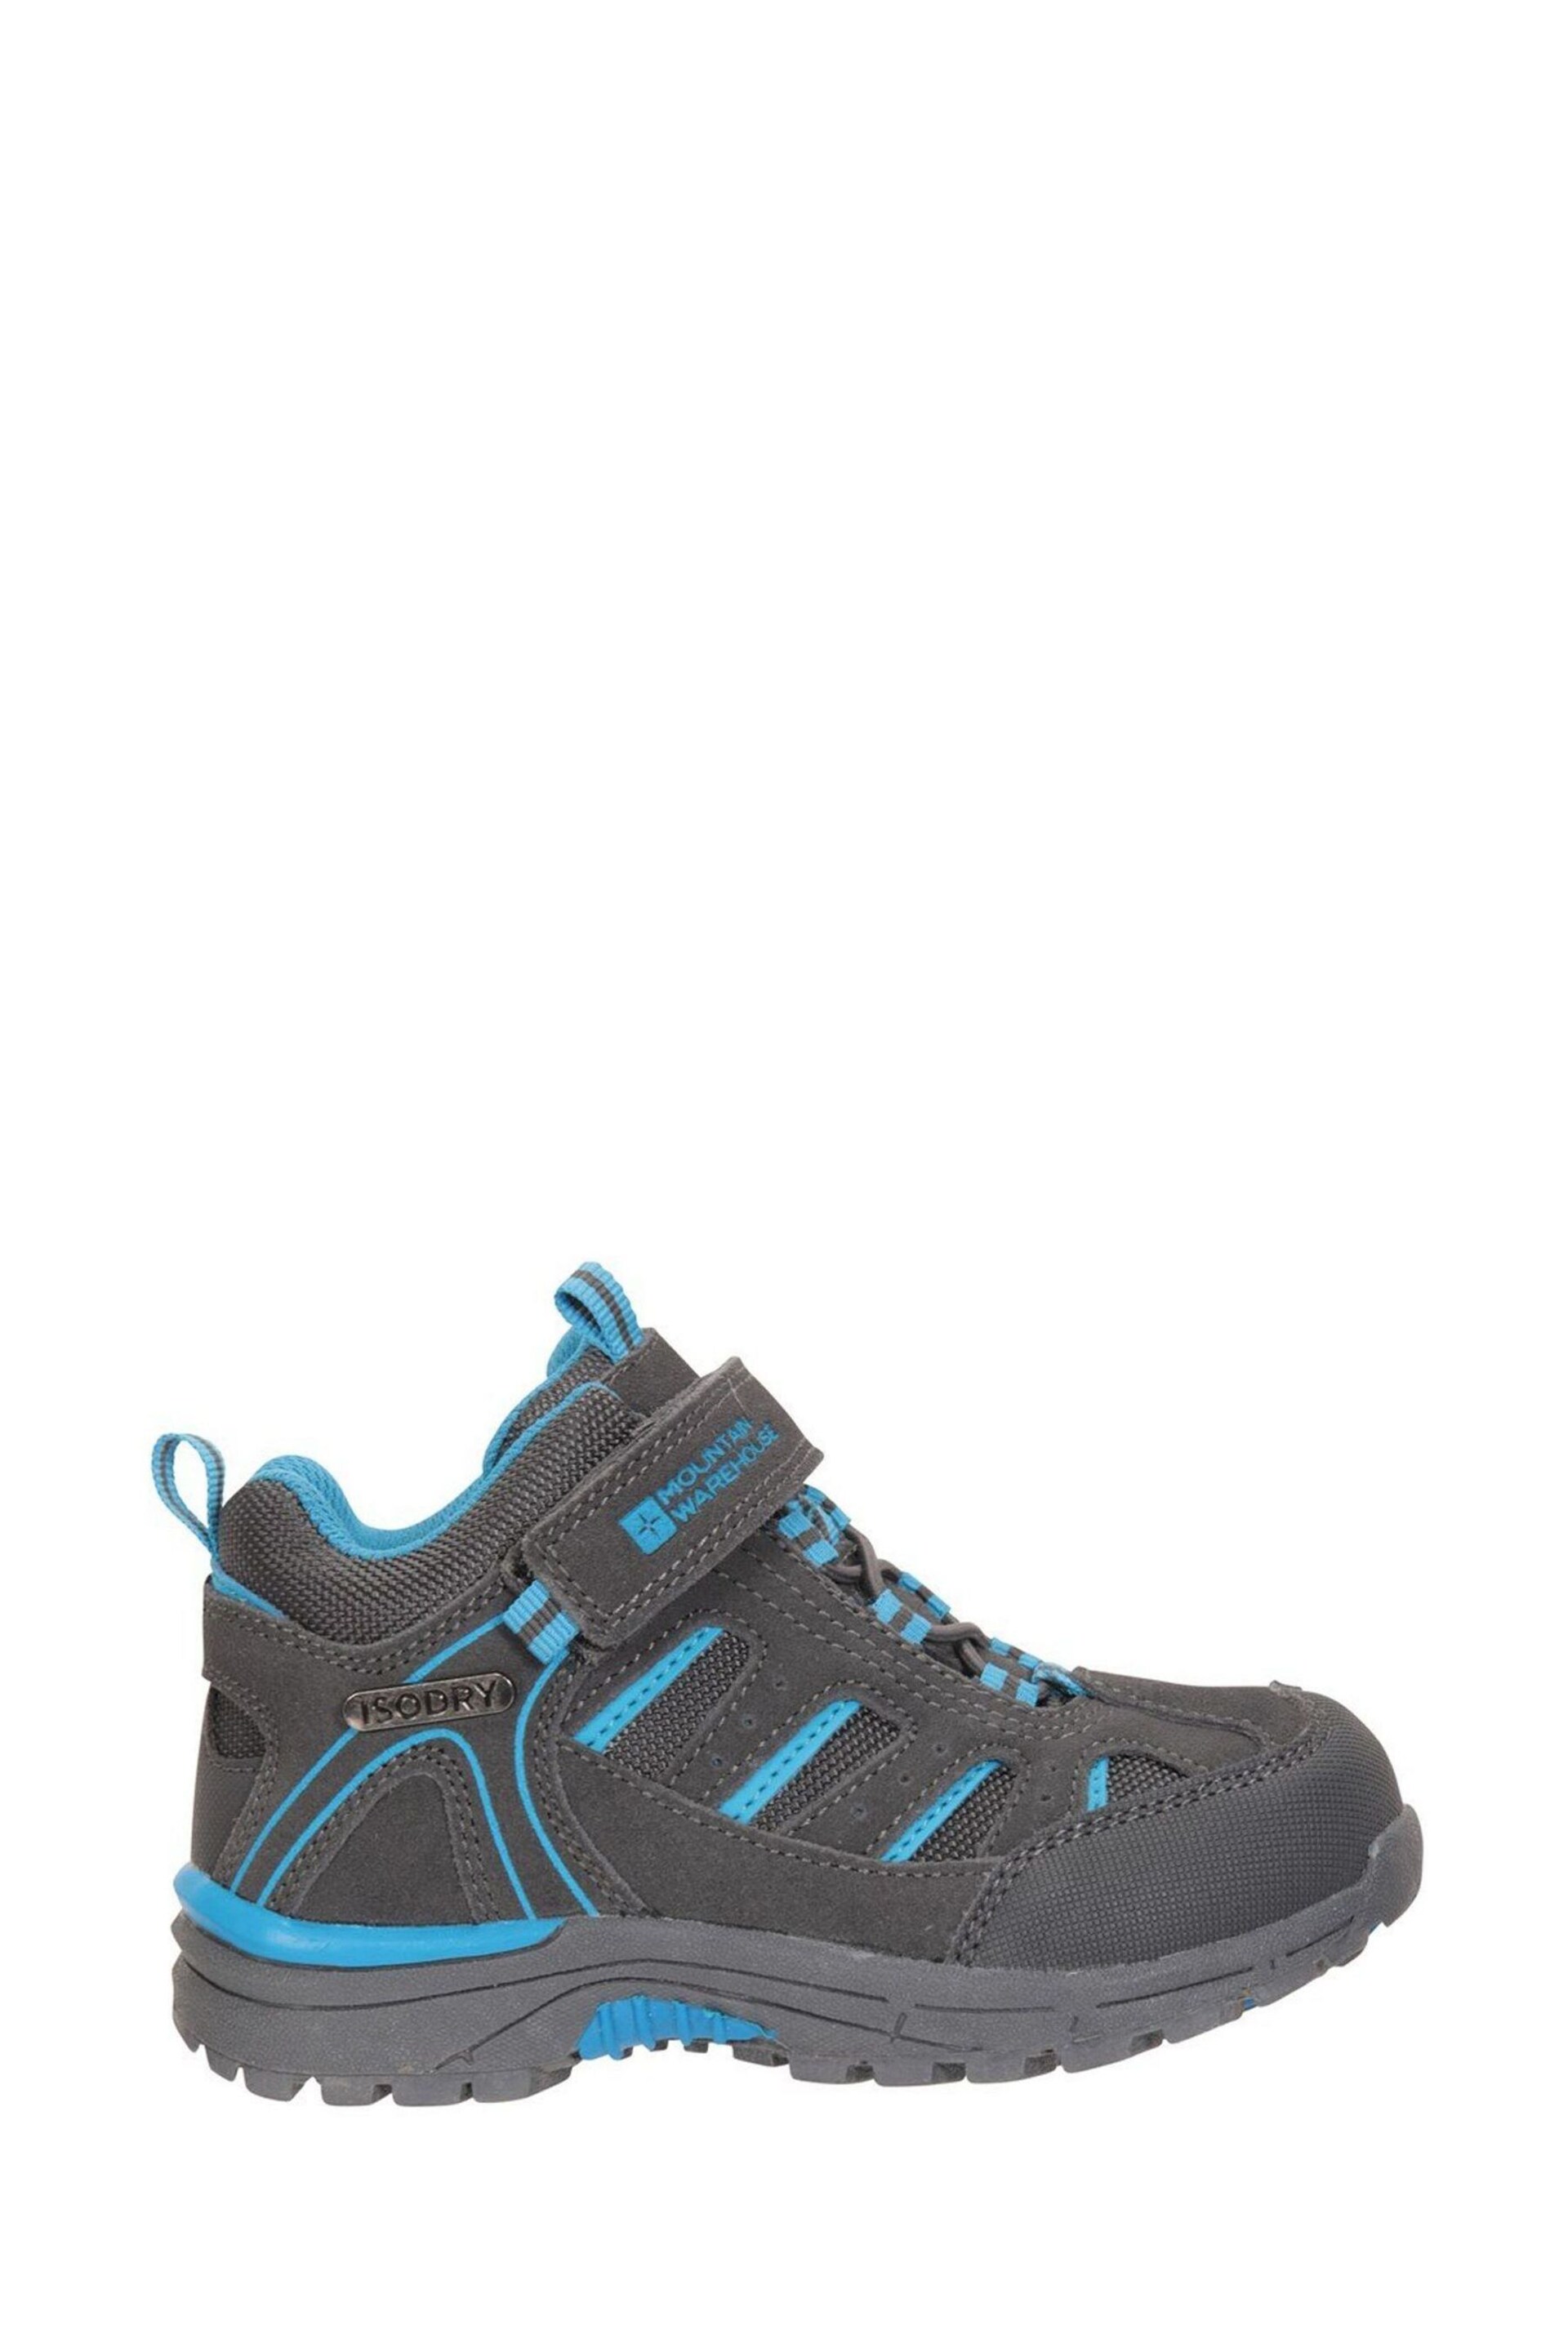 Mountain Warehouse Grey Drift Junior Waterproof Walking Boots - Image 1 of 4